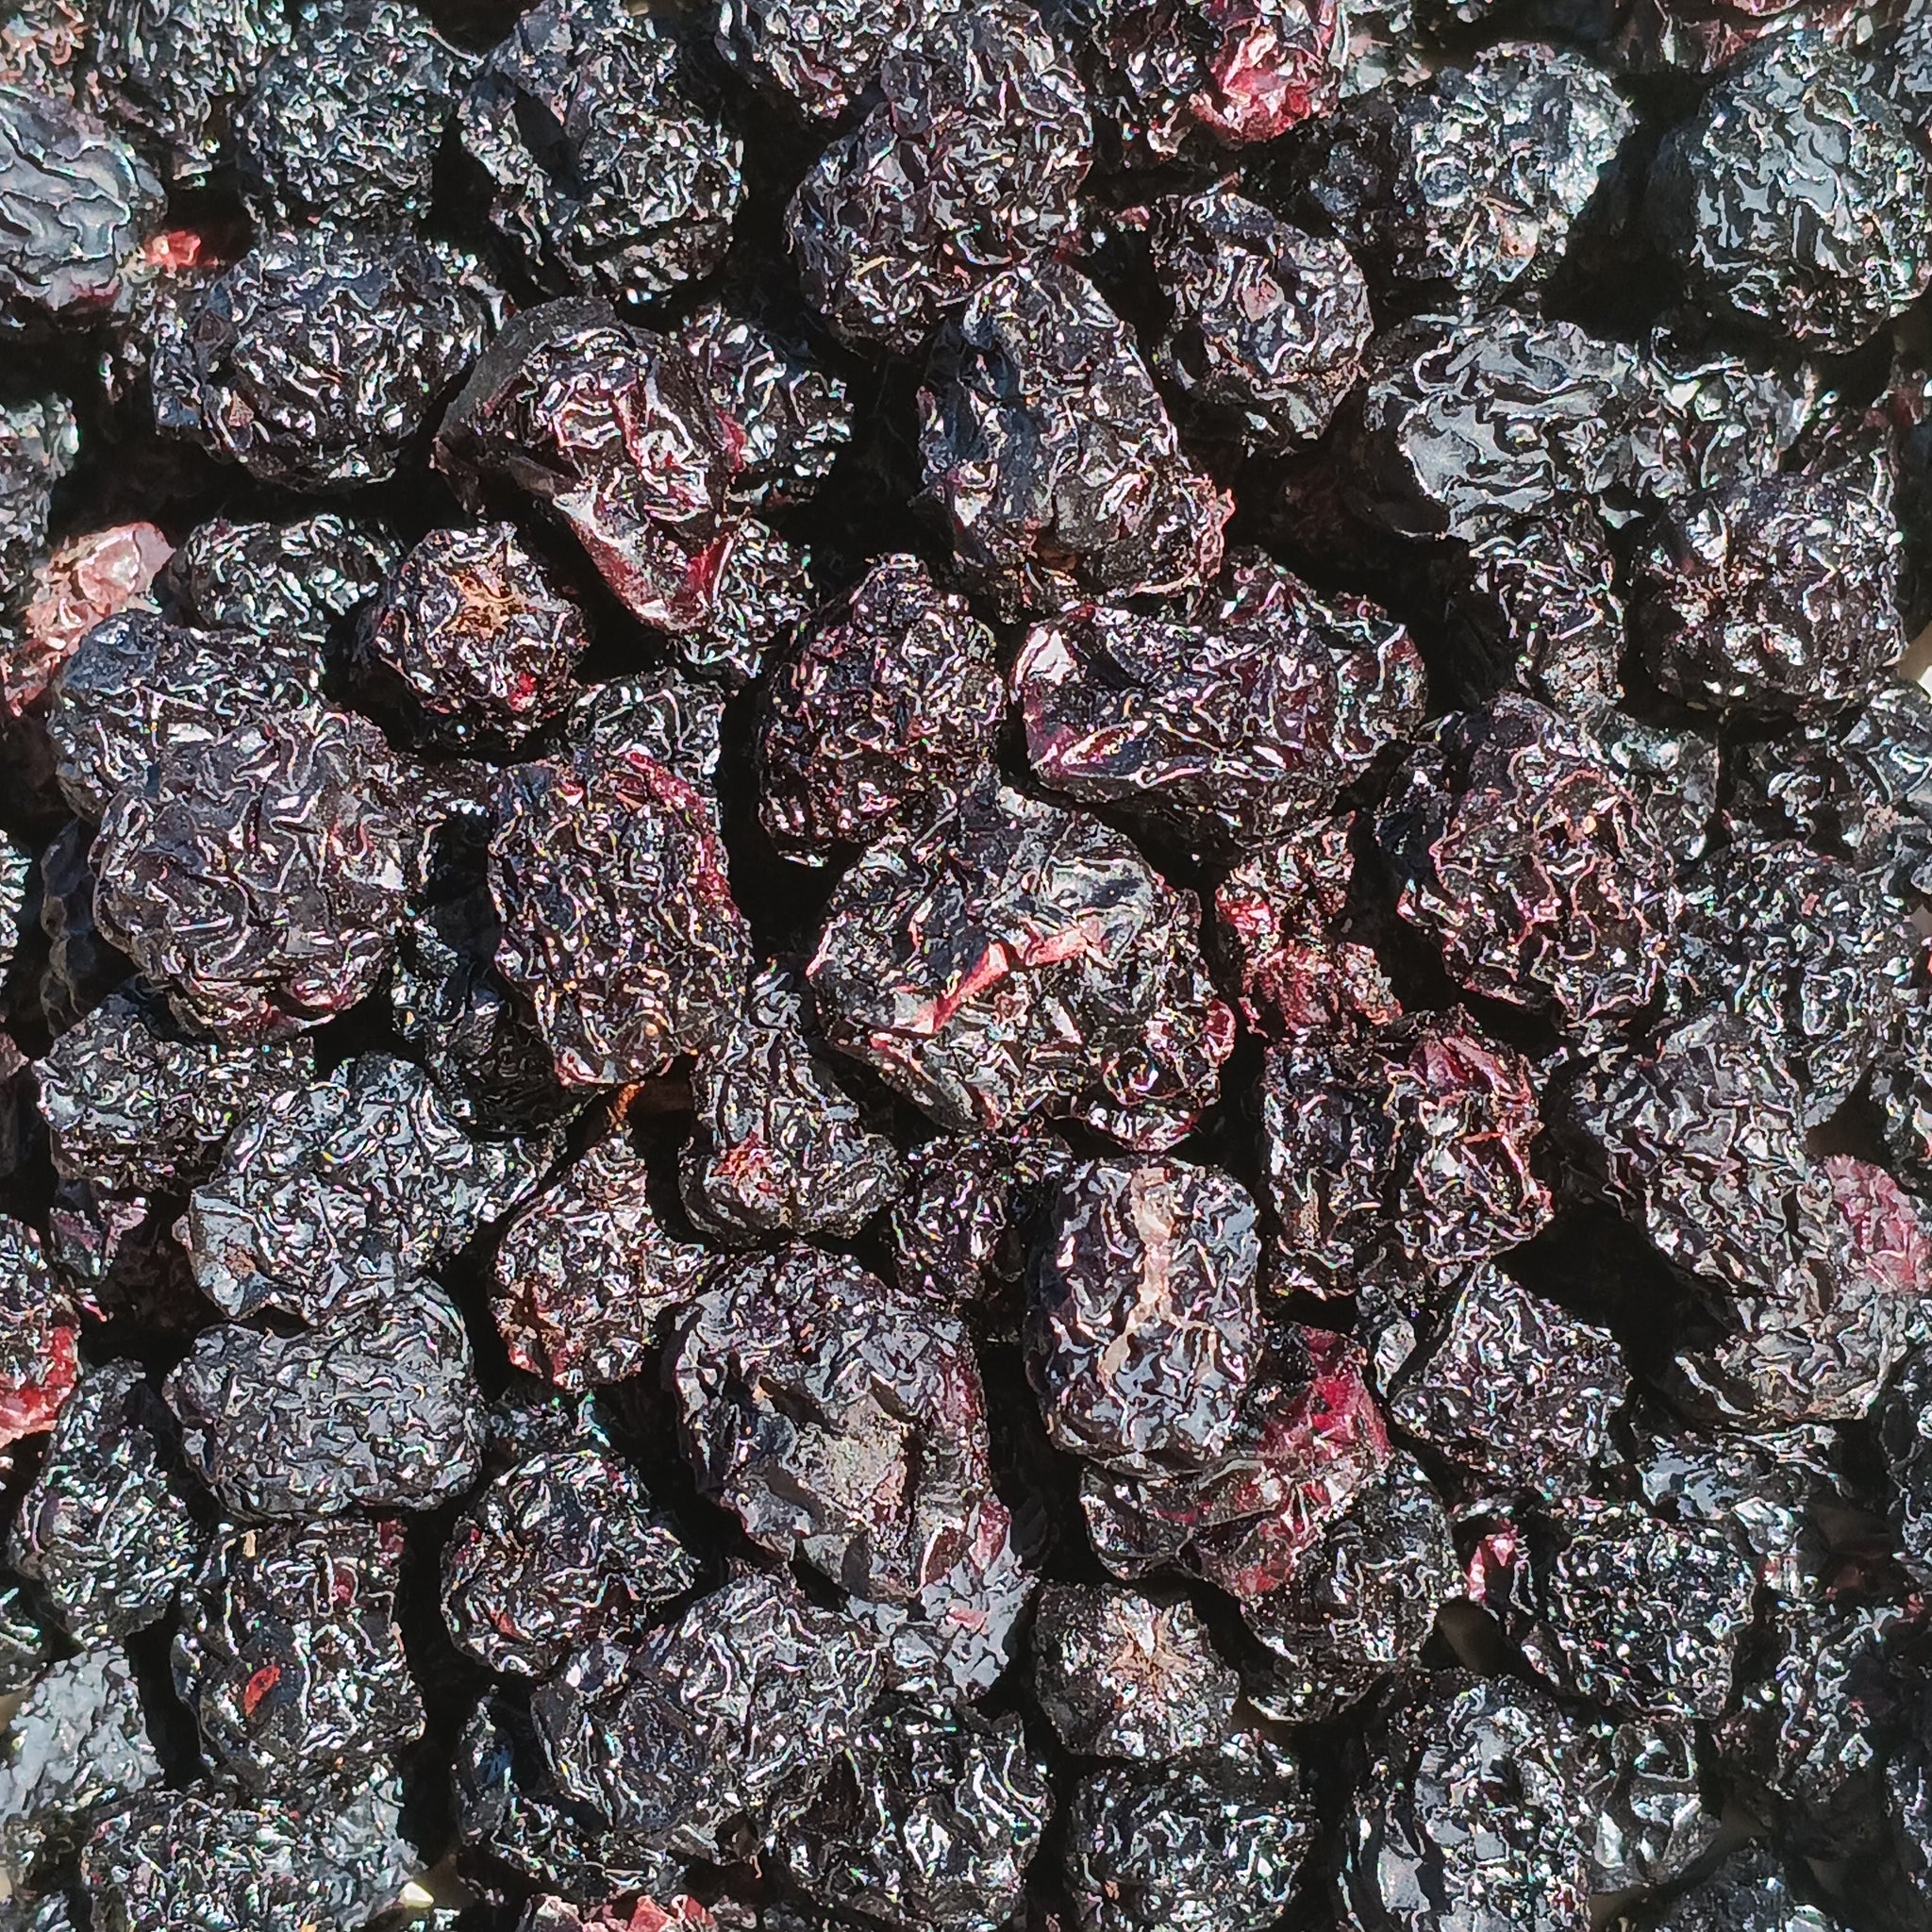 Black Chokeberry (Aronia Melanocarpa) - Organic